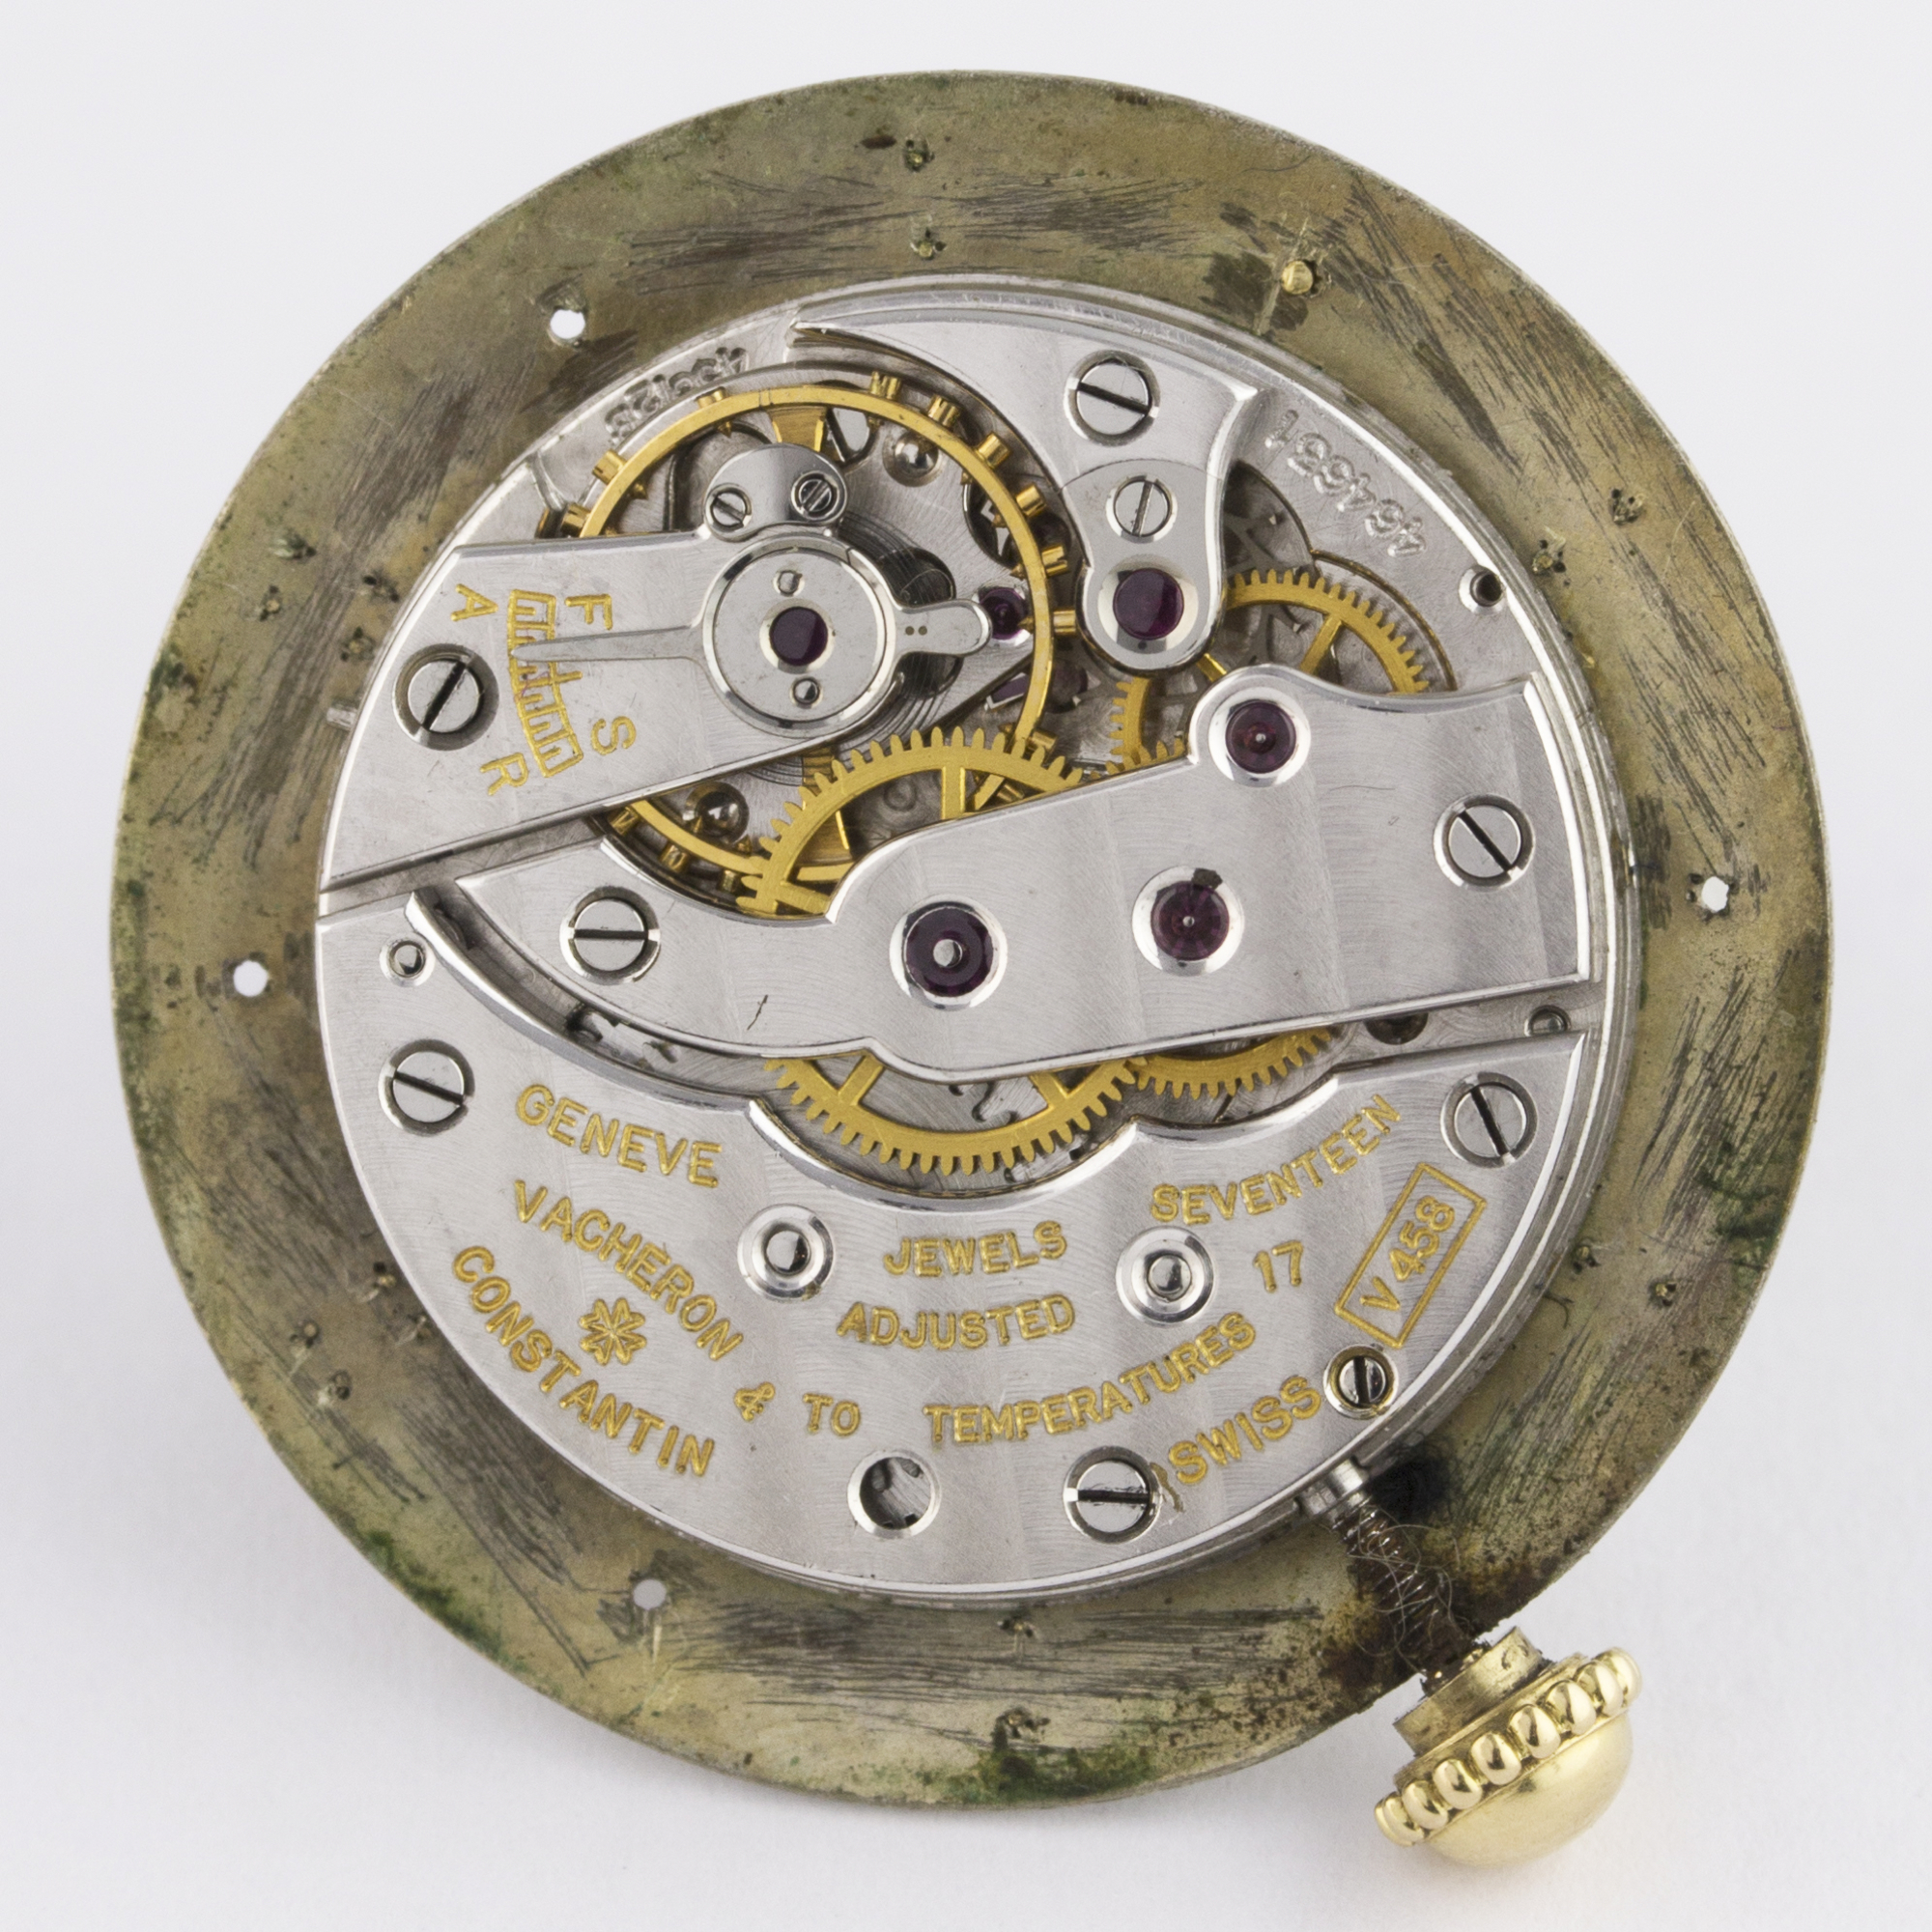 A GENTLEMAN'S STEEL & GOLD VACHERON & CONSTANTIN WRIST WATCH CIRCA 1940s D: Silver dial with bi- - Image 7 of 8